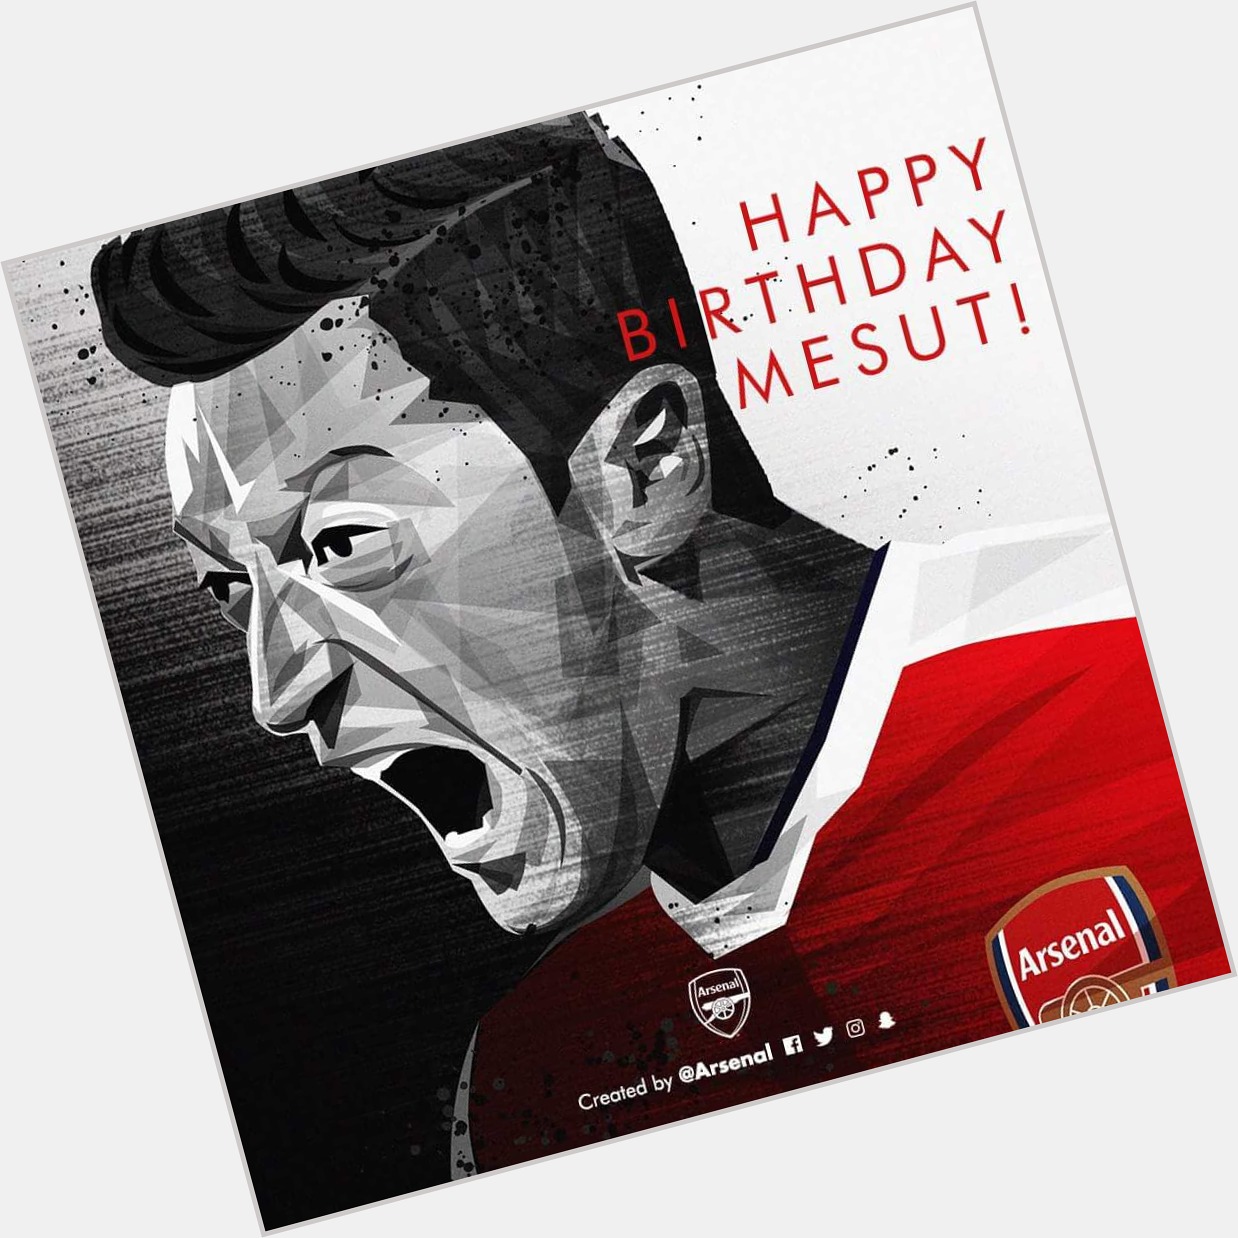 Happy birthday Mesut Ozil. Long life is assured. 